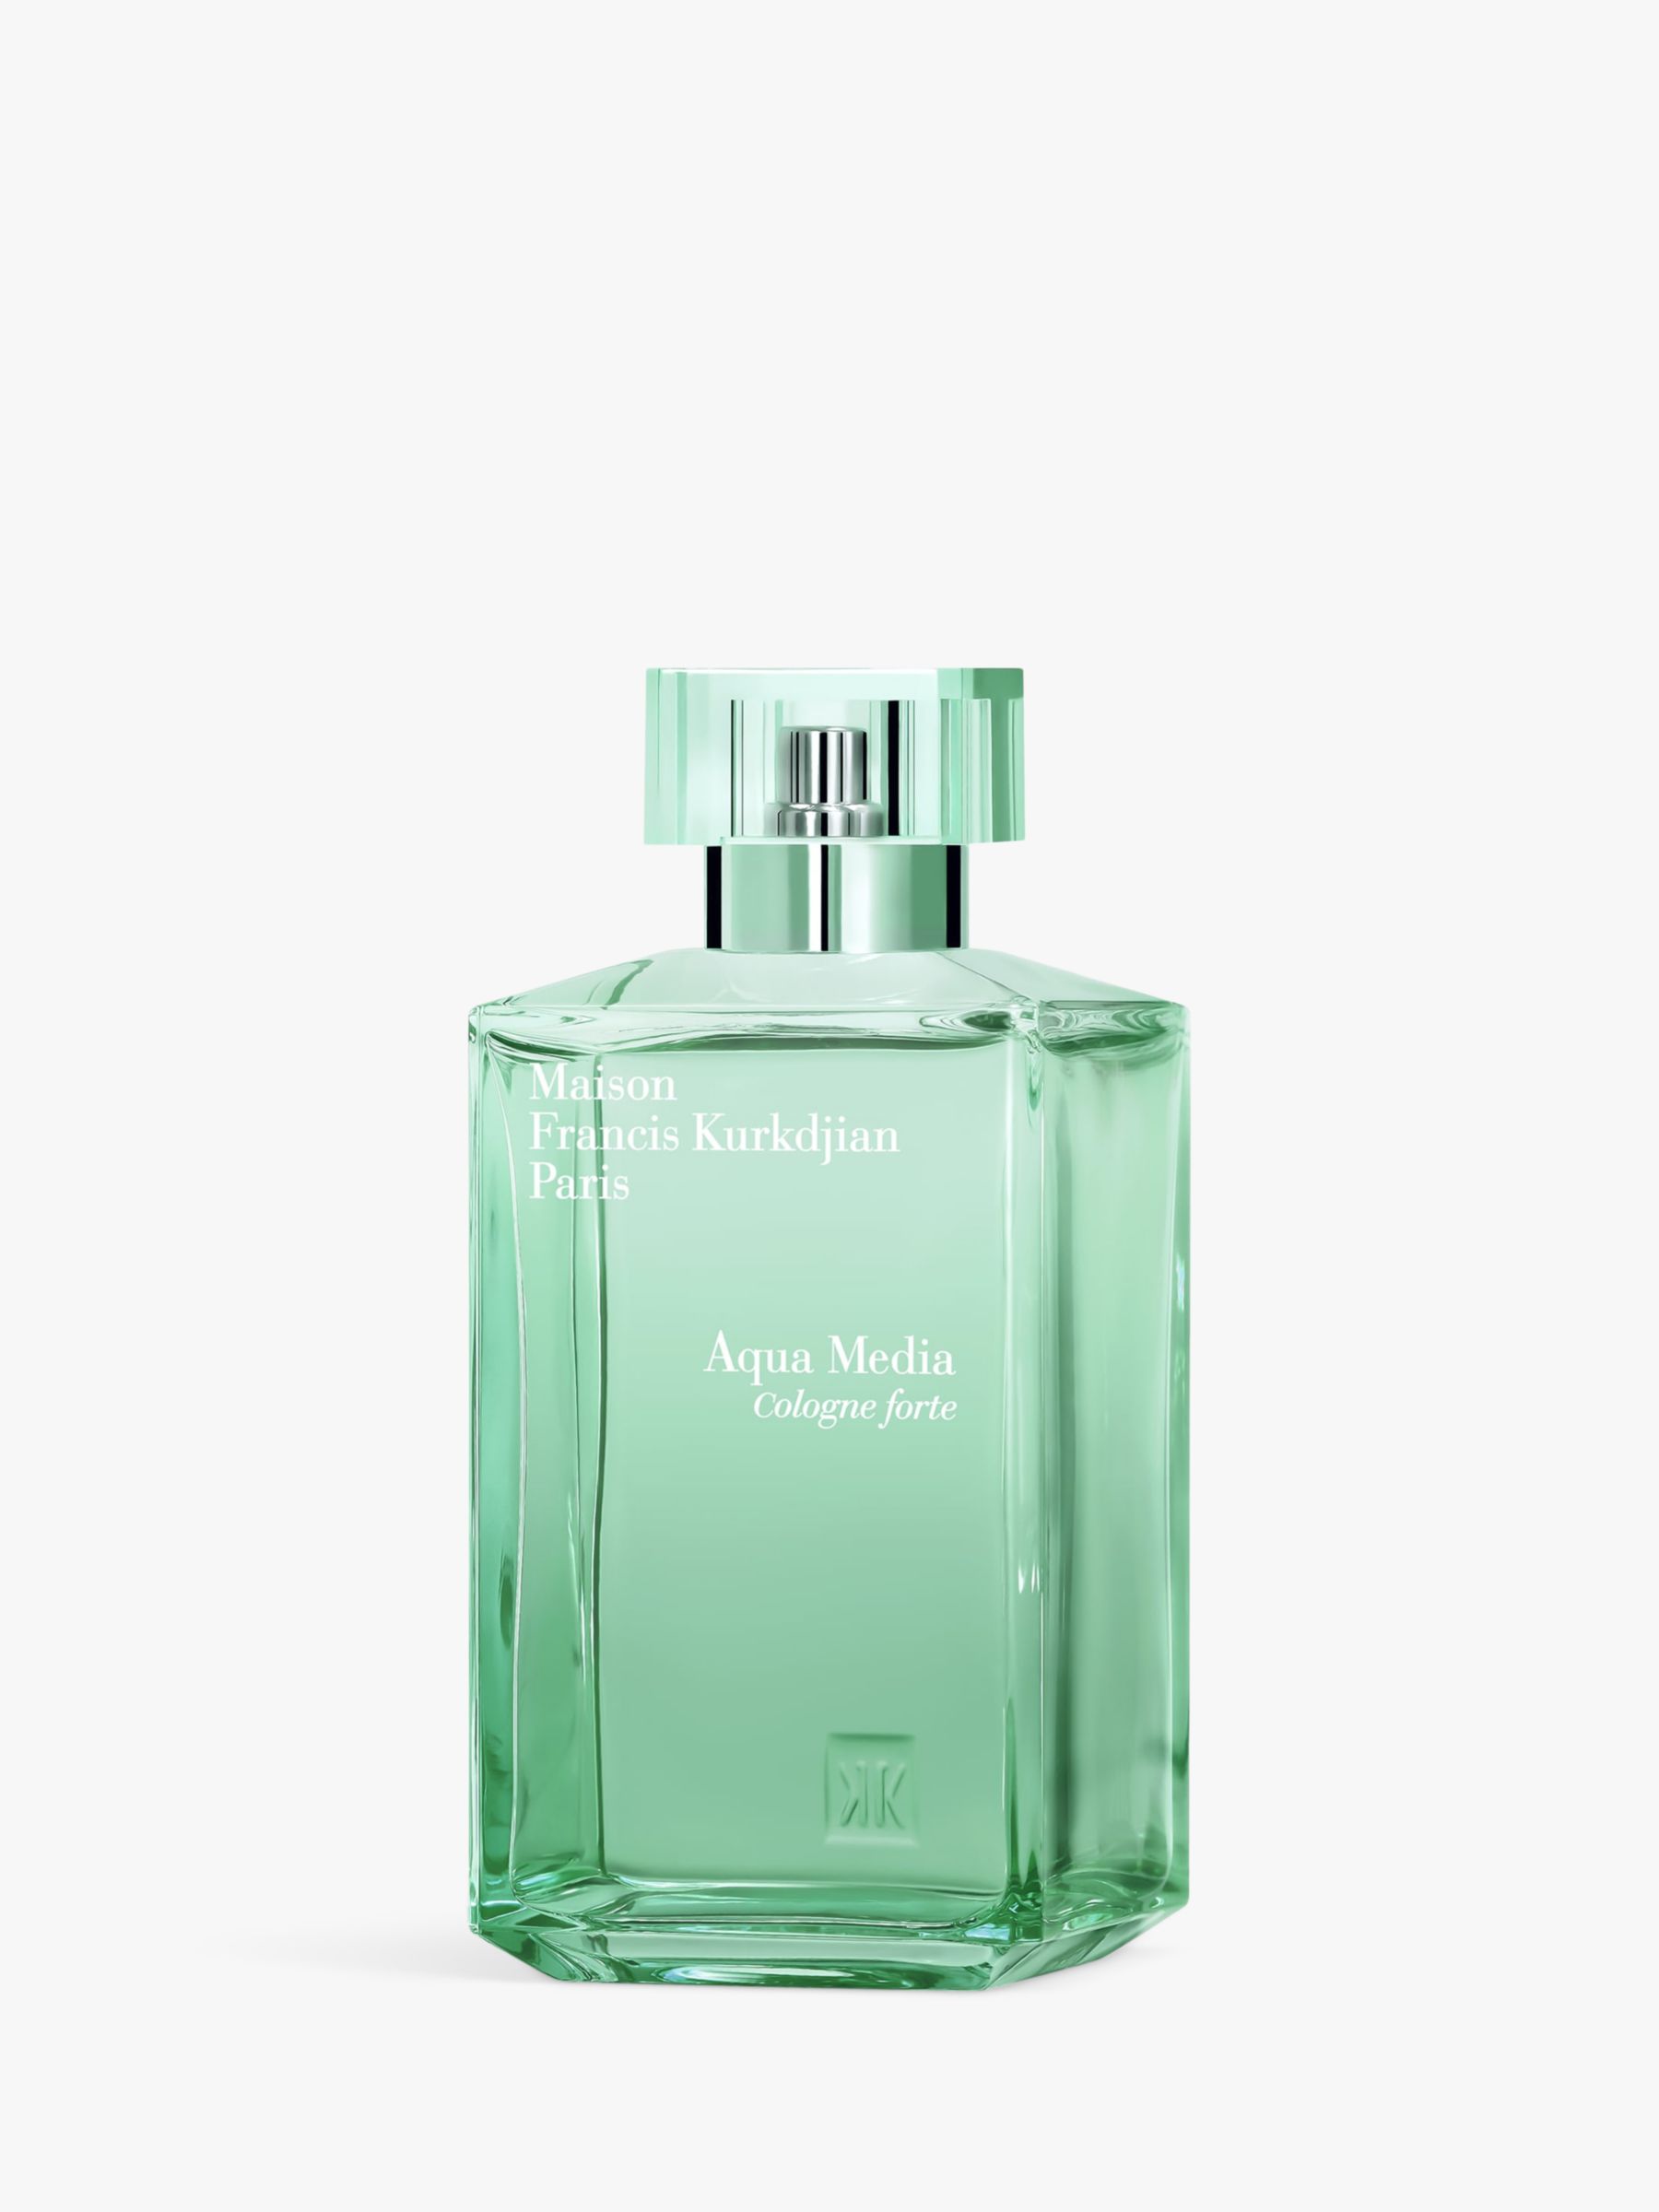 Maison Francis Kurkdjian Aqua Media Cologne Forte Eau de Parfum, 200ml 1